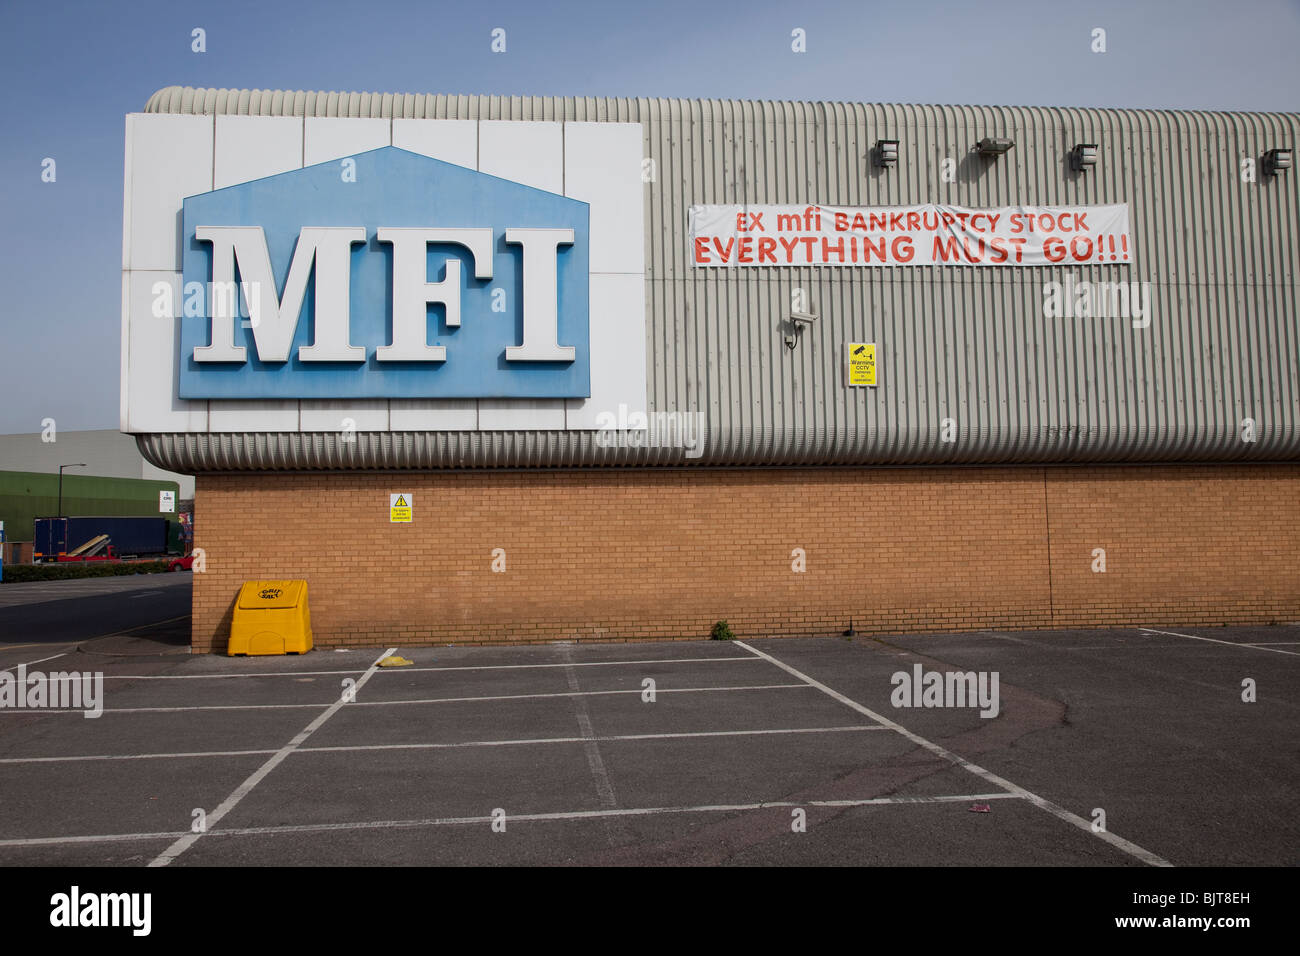 closed Mfi retail site North London Stock Photo